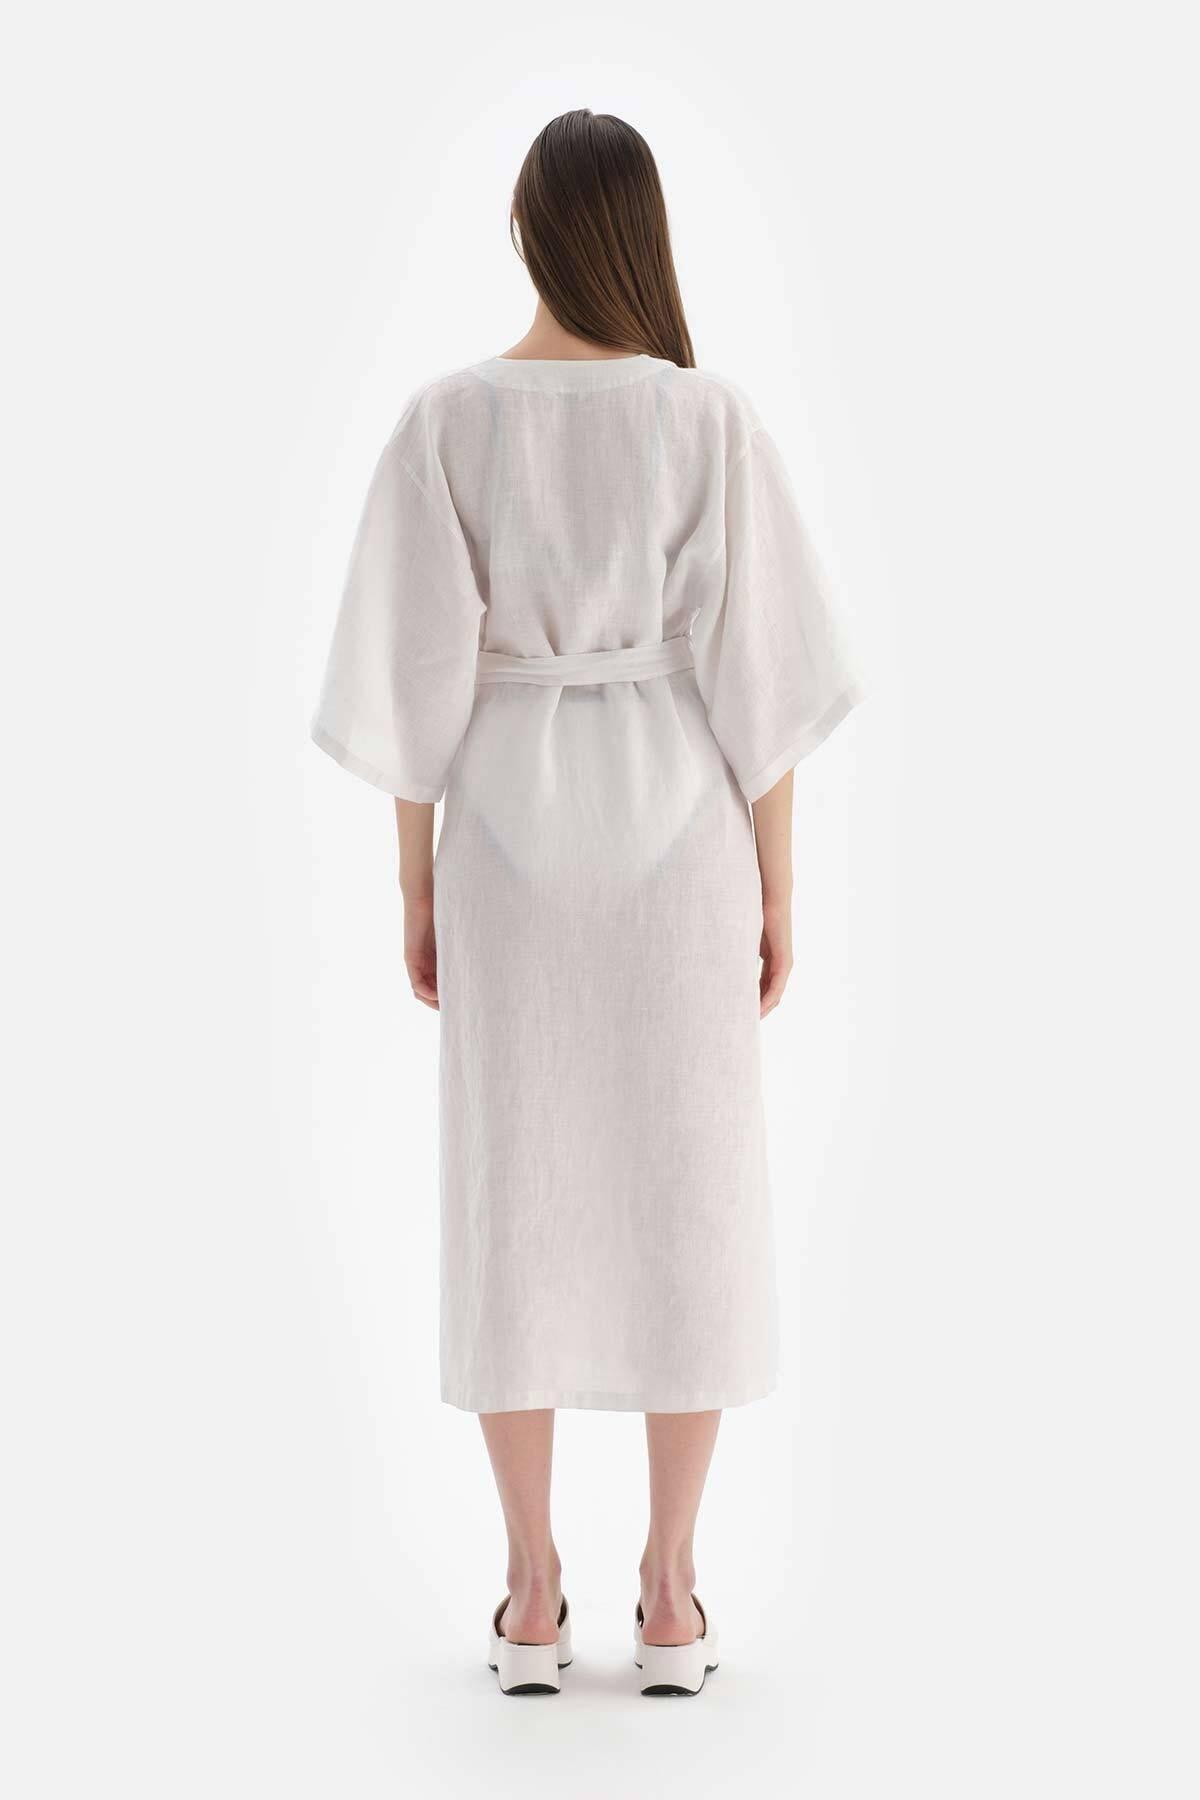 Dagi - White Linen Long Kimono